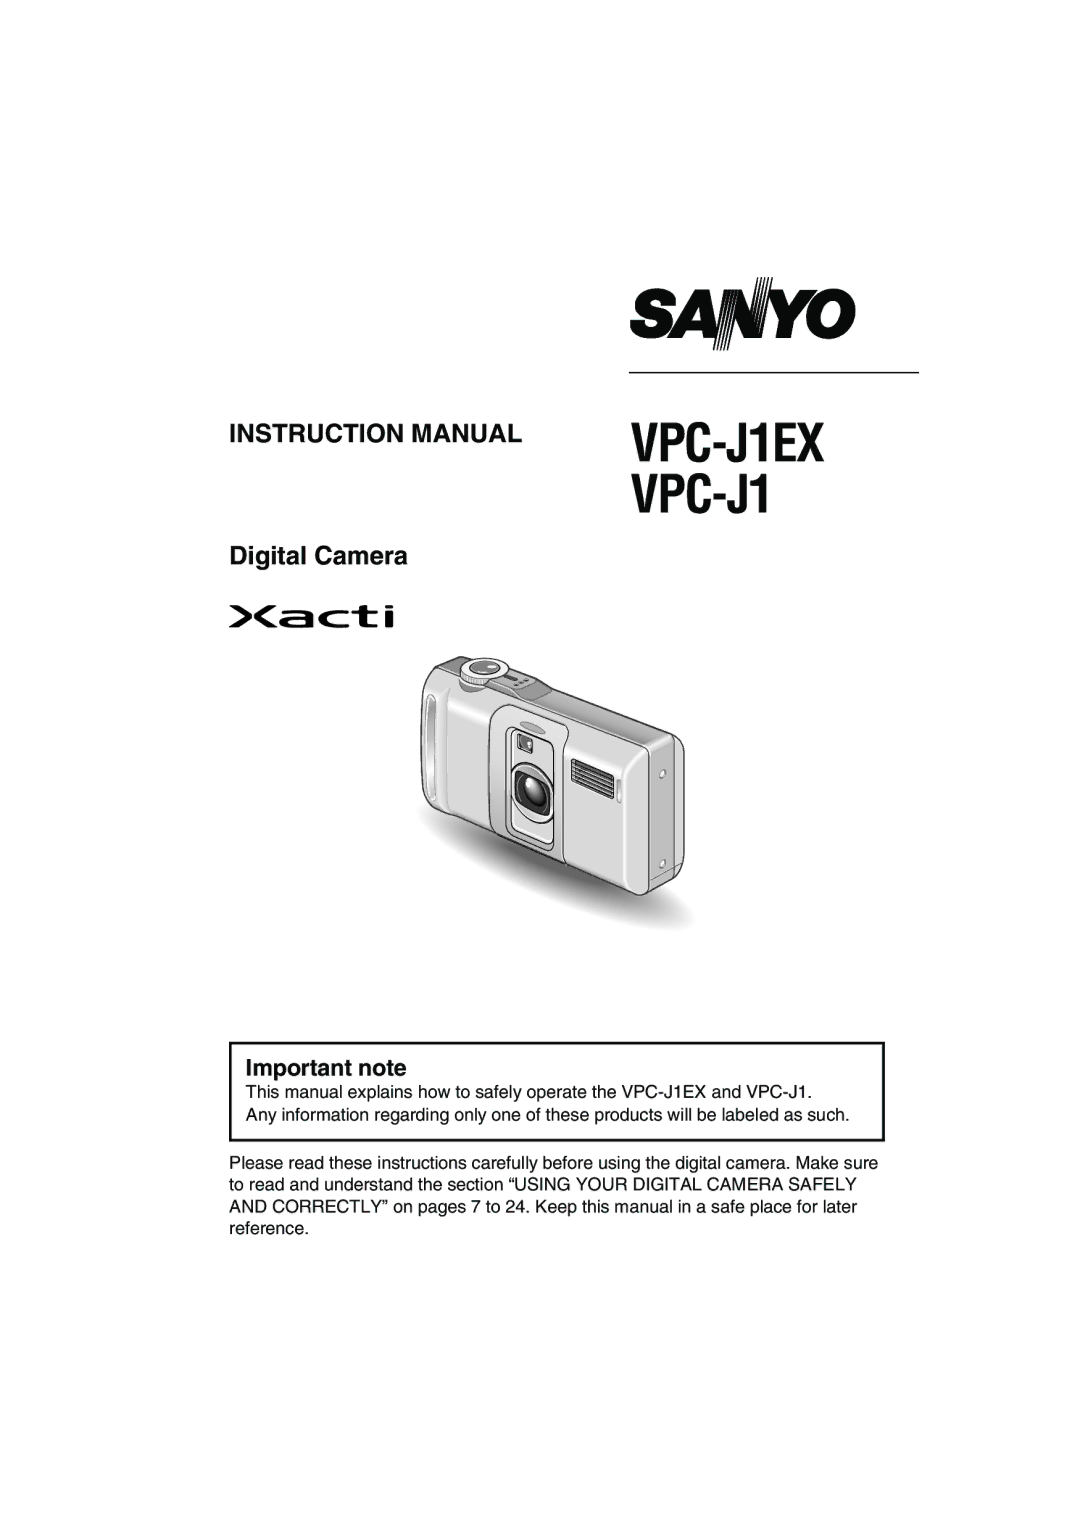 Sanyo instruction manual VPC-J1EX VPC-J1 